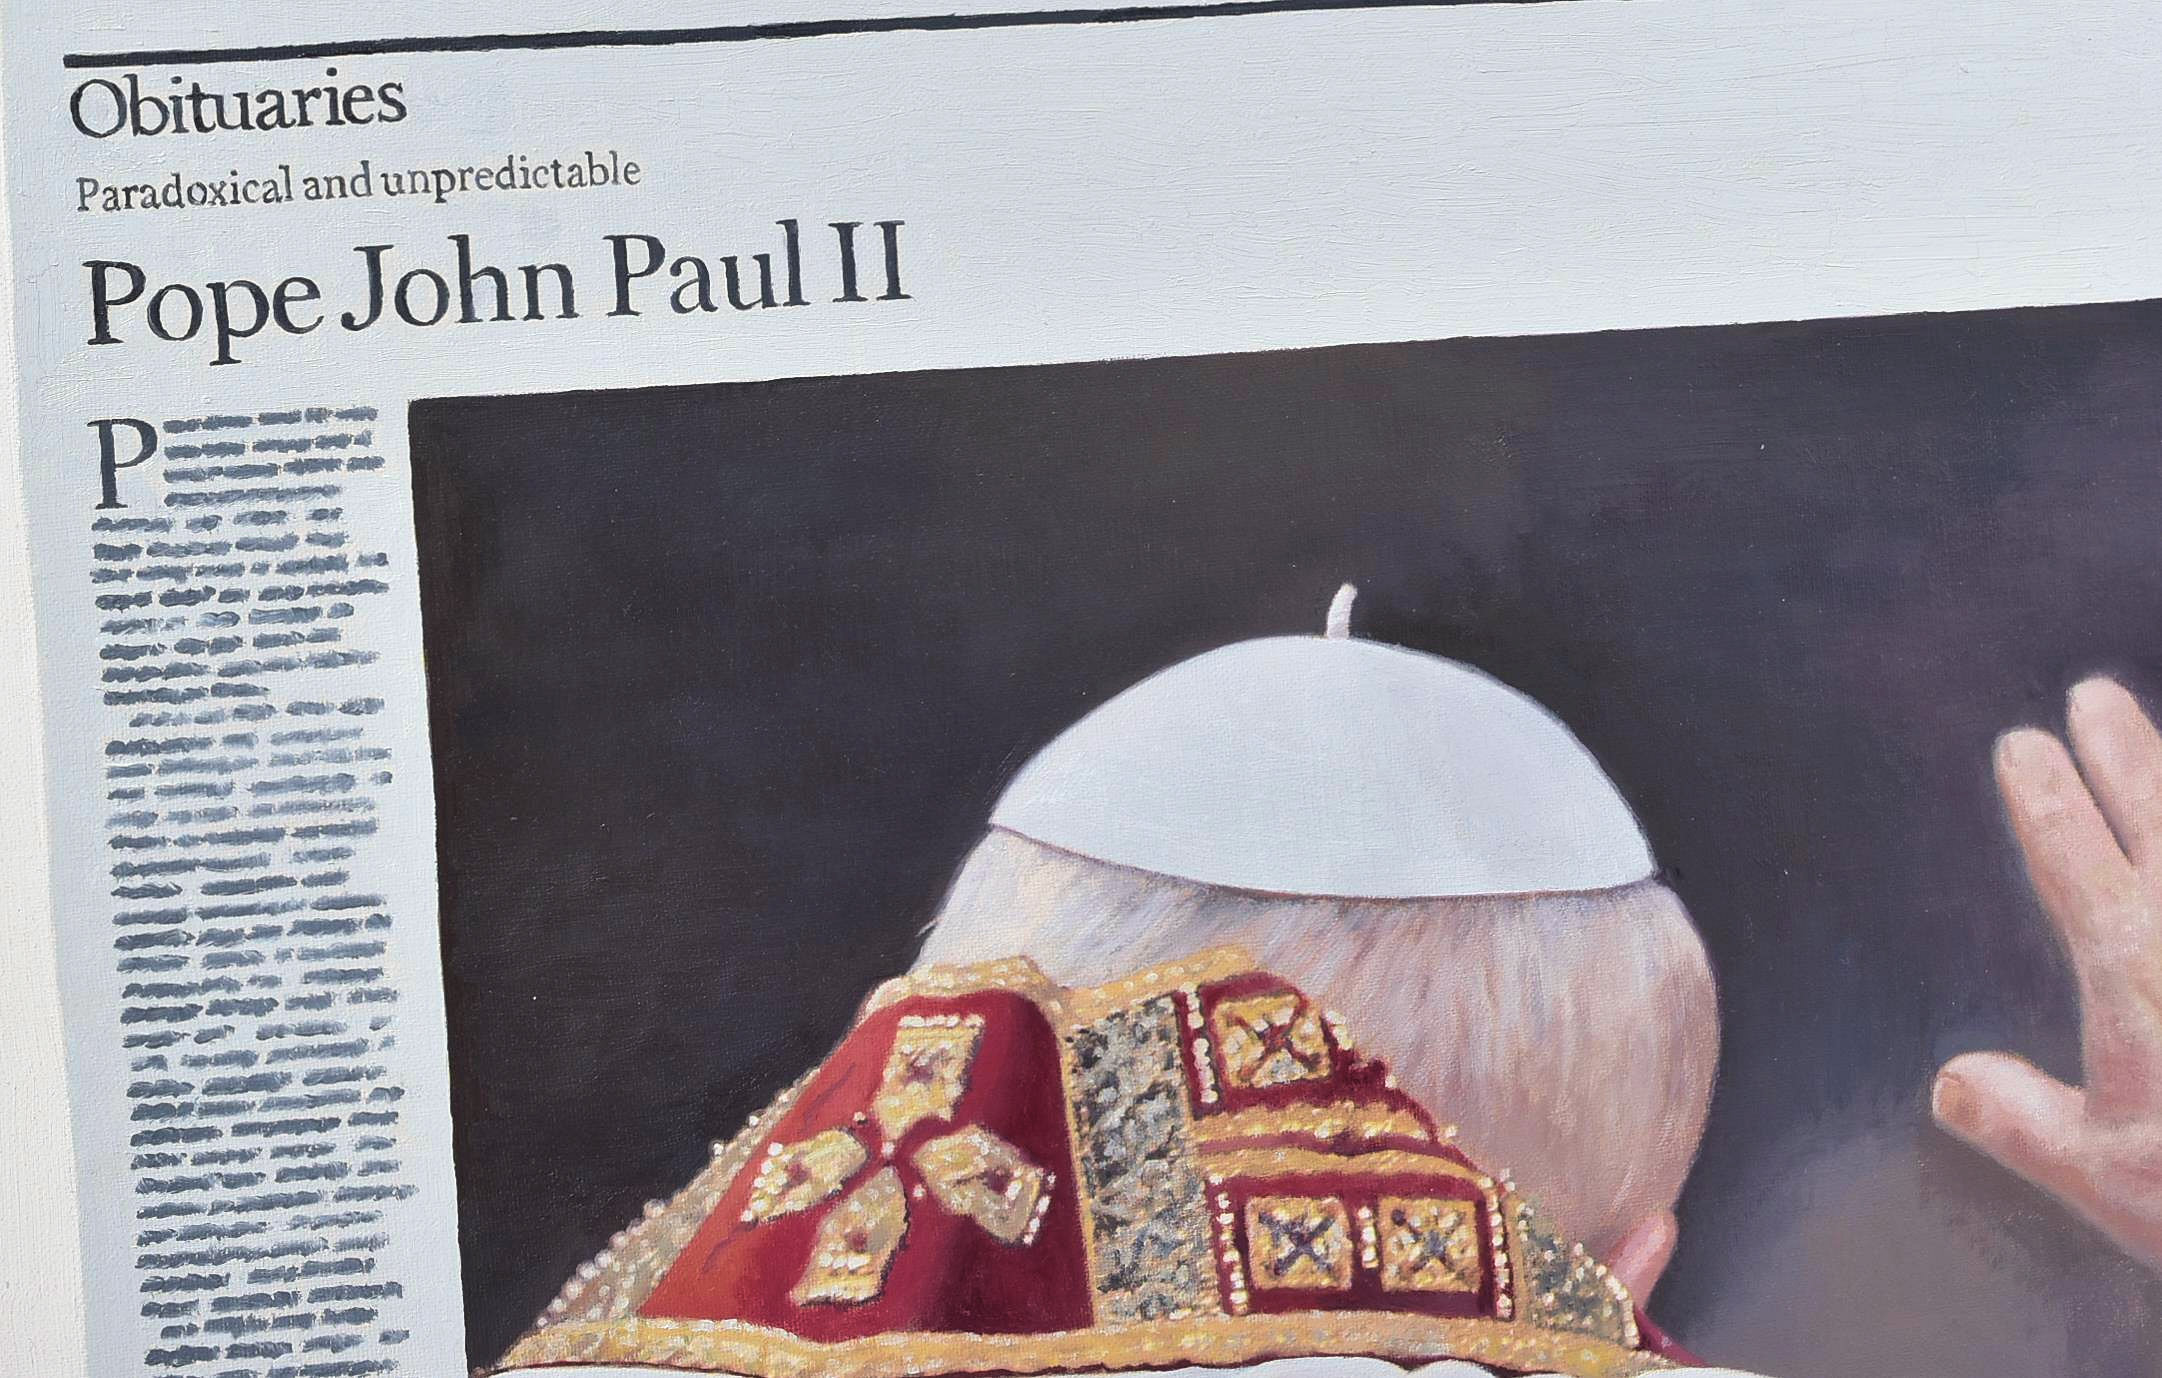 HUGH MENDES (B.1955) - OBITUARIES POPE JOHN PAUL II, 2006 - Image 2 of 6